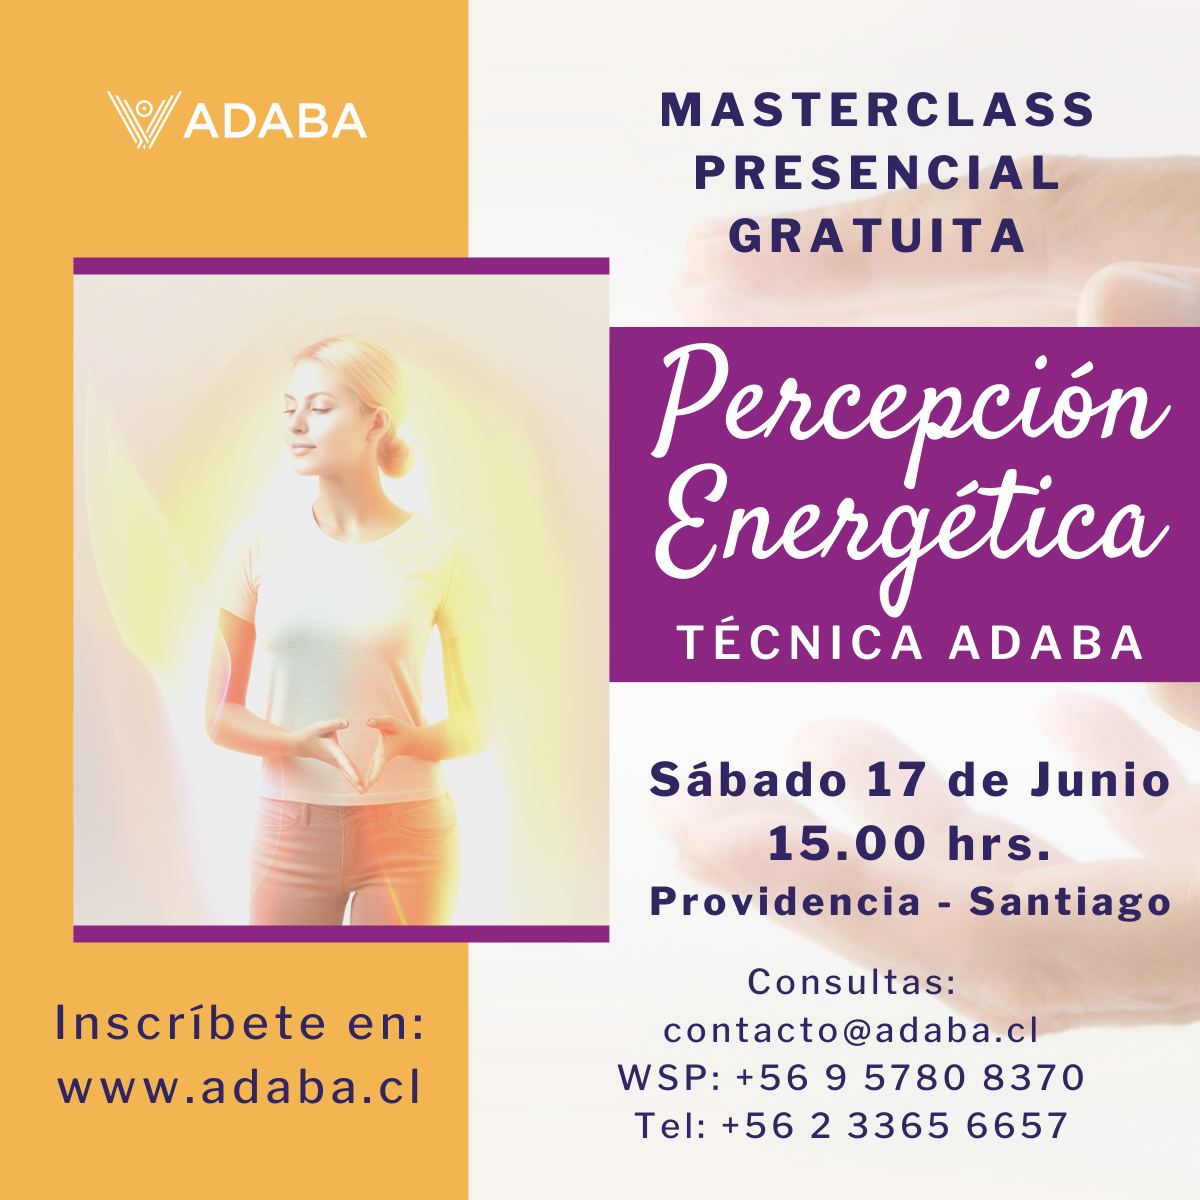 Masterclass Presencial Gratuita - Percepción Energética Técnica ADABA ✨- 17 Junio